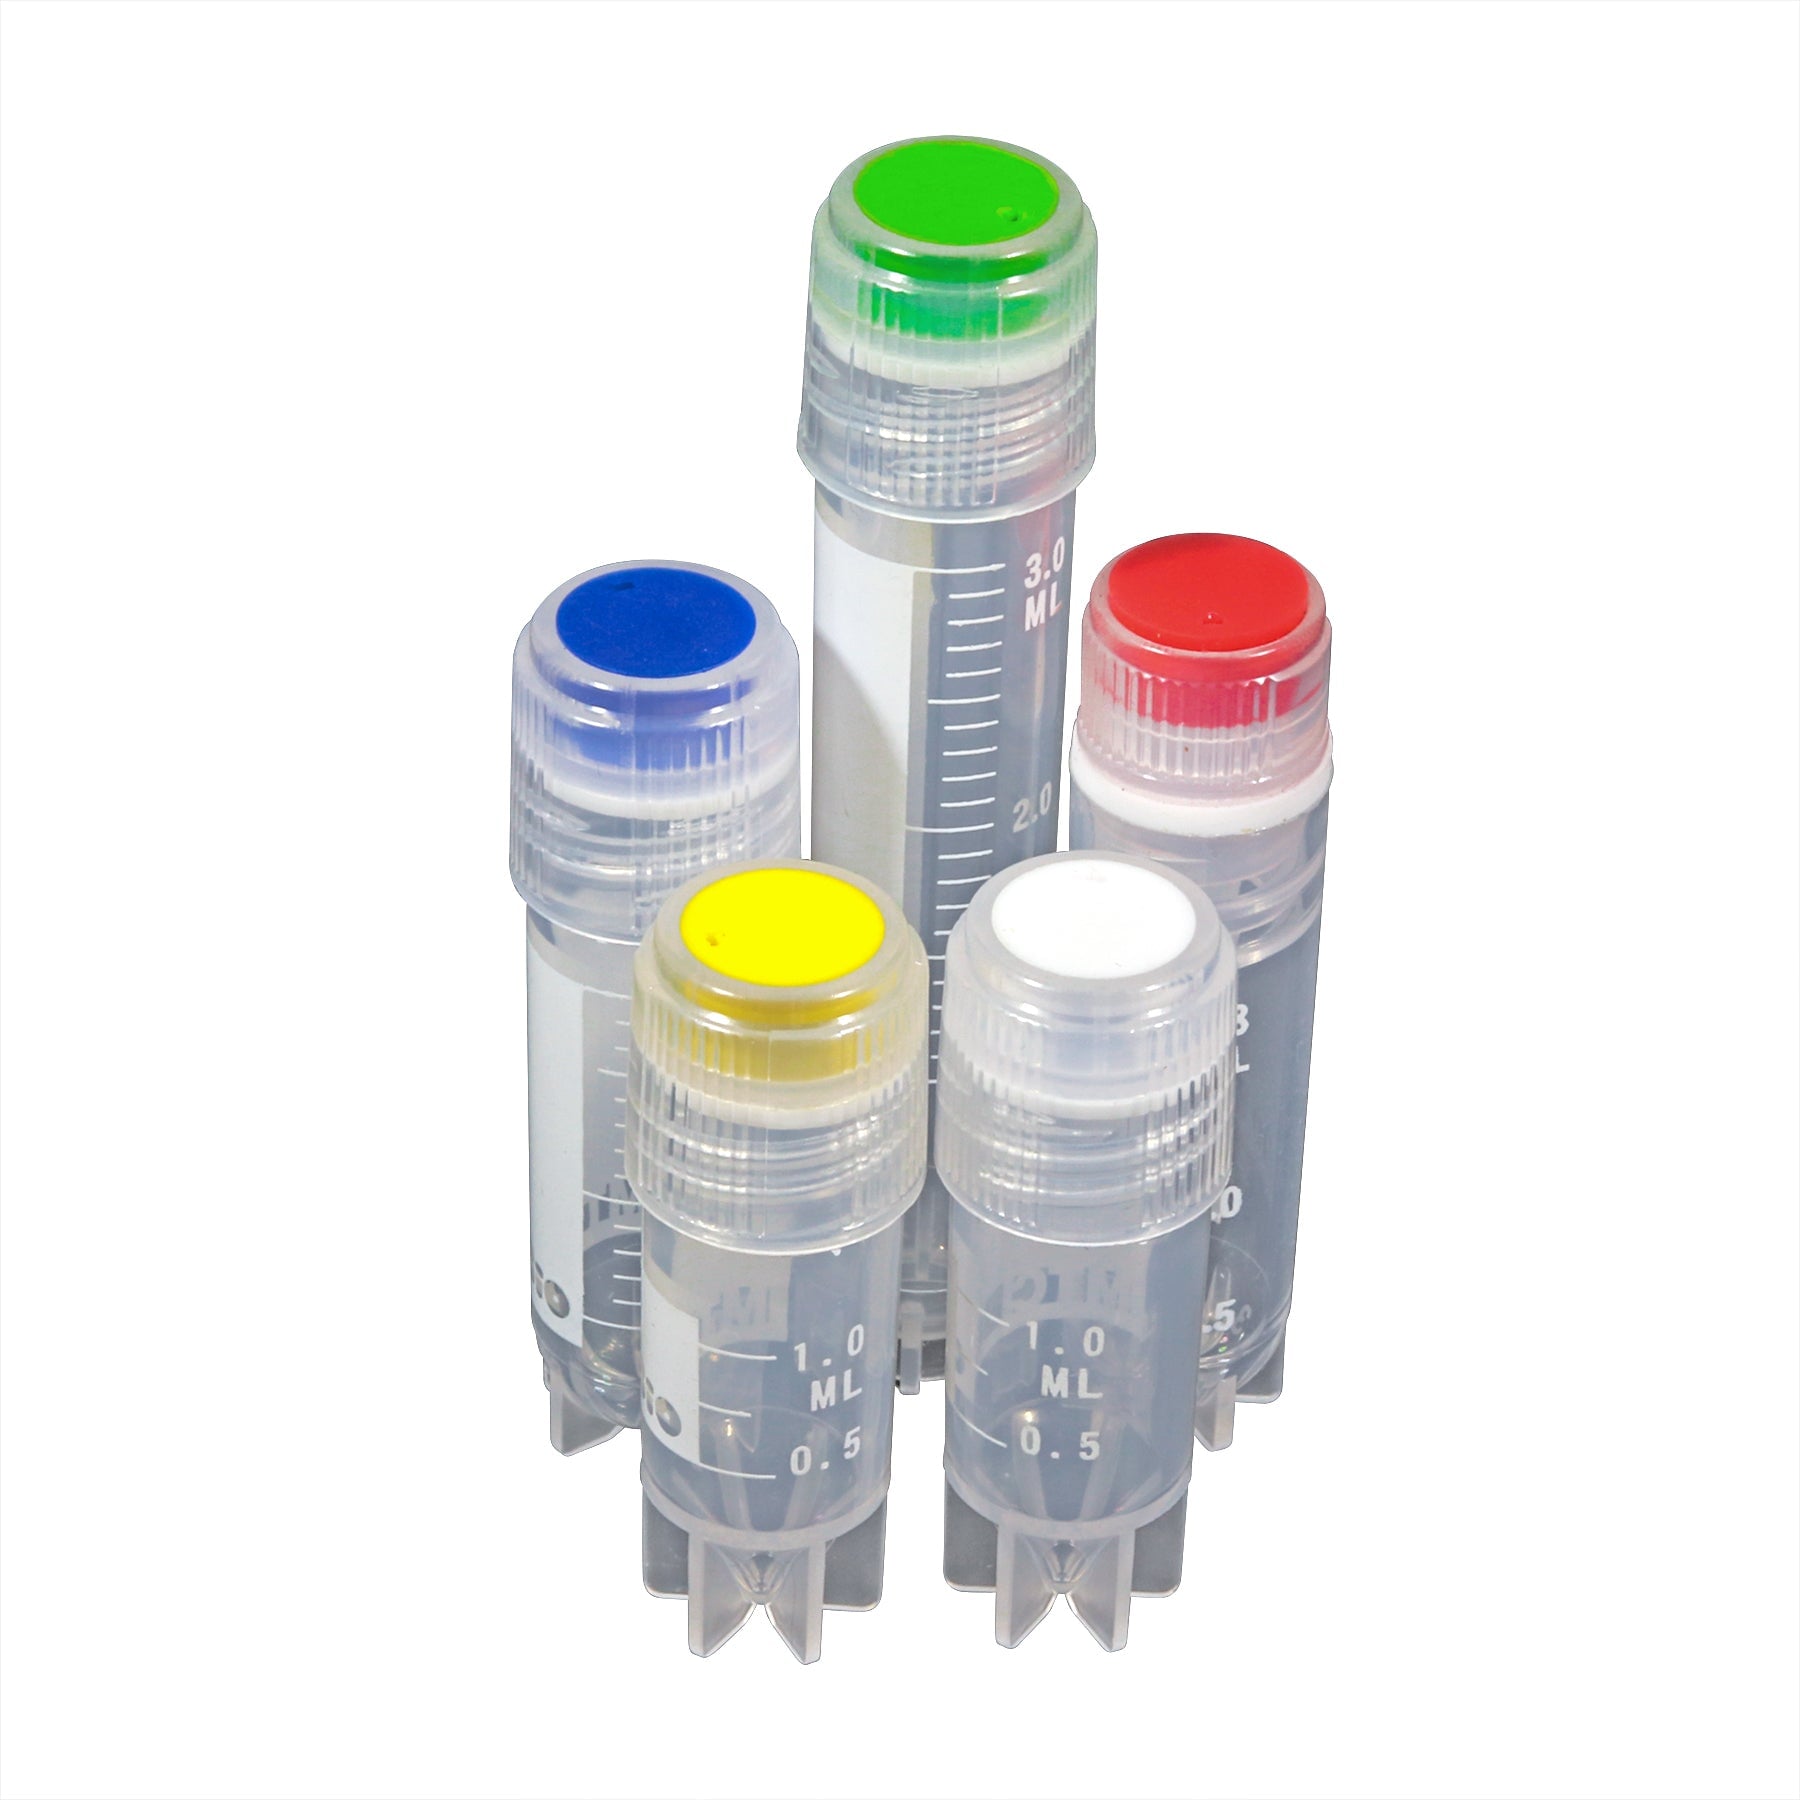 MTC Bio V5809-G Cap inserts for cryogenic vials, green, 500/pk